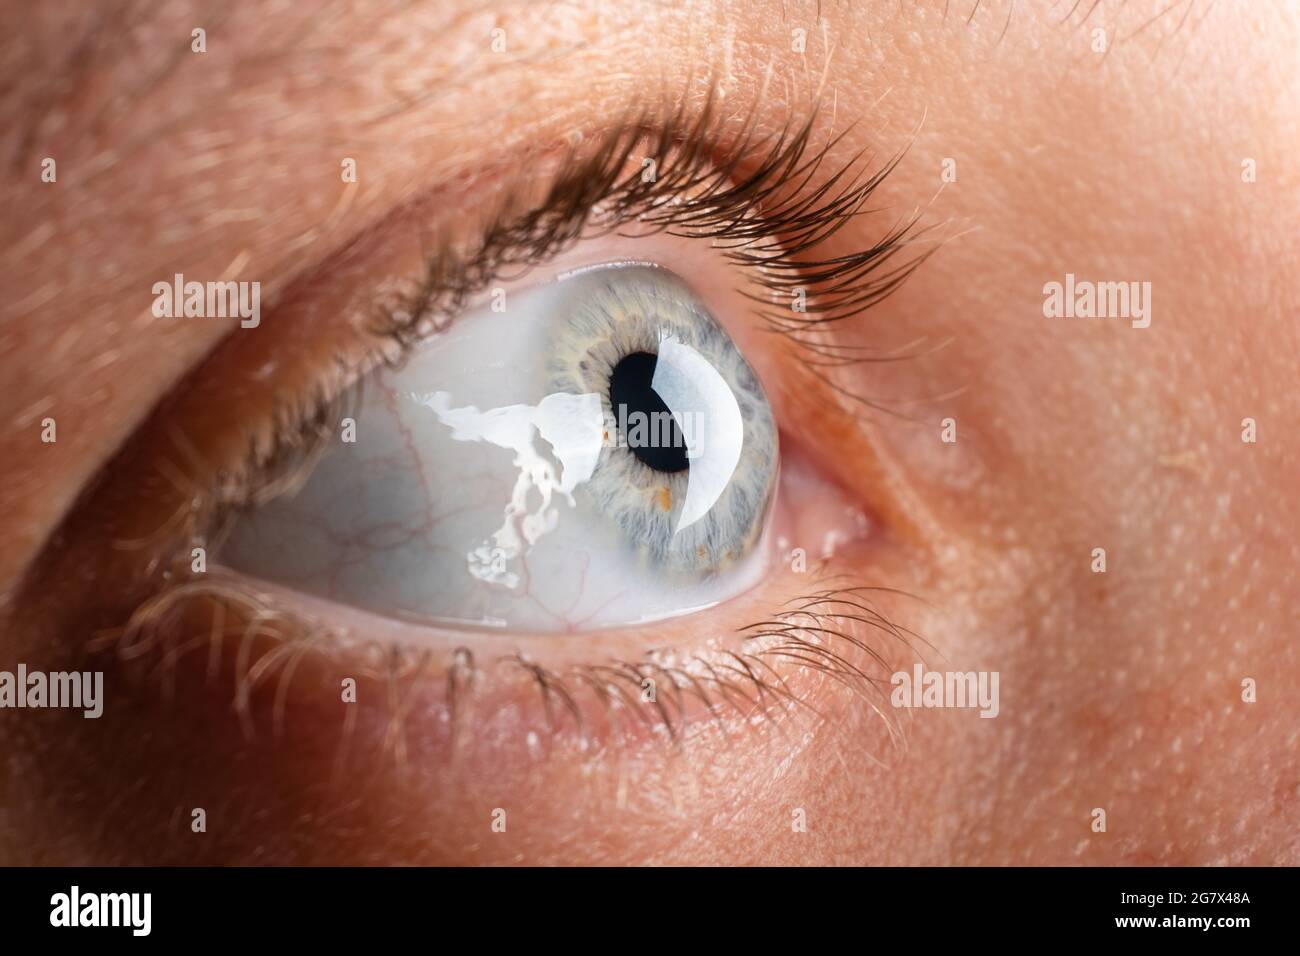 beautiful female eye, diagnosis of keratoconus corneal dystrophy. Stock Photo